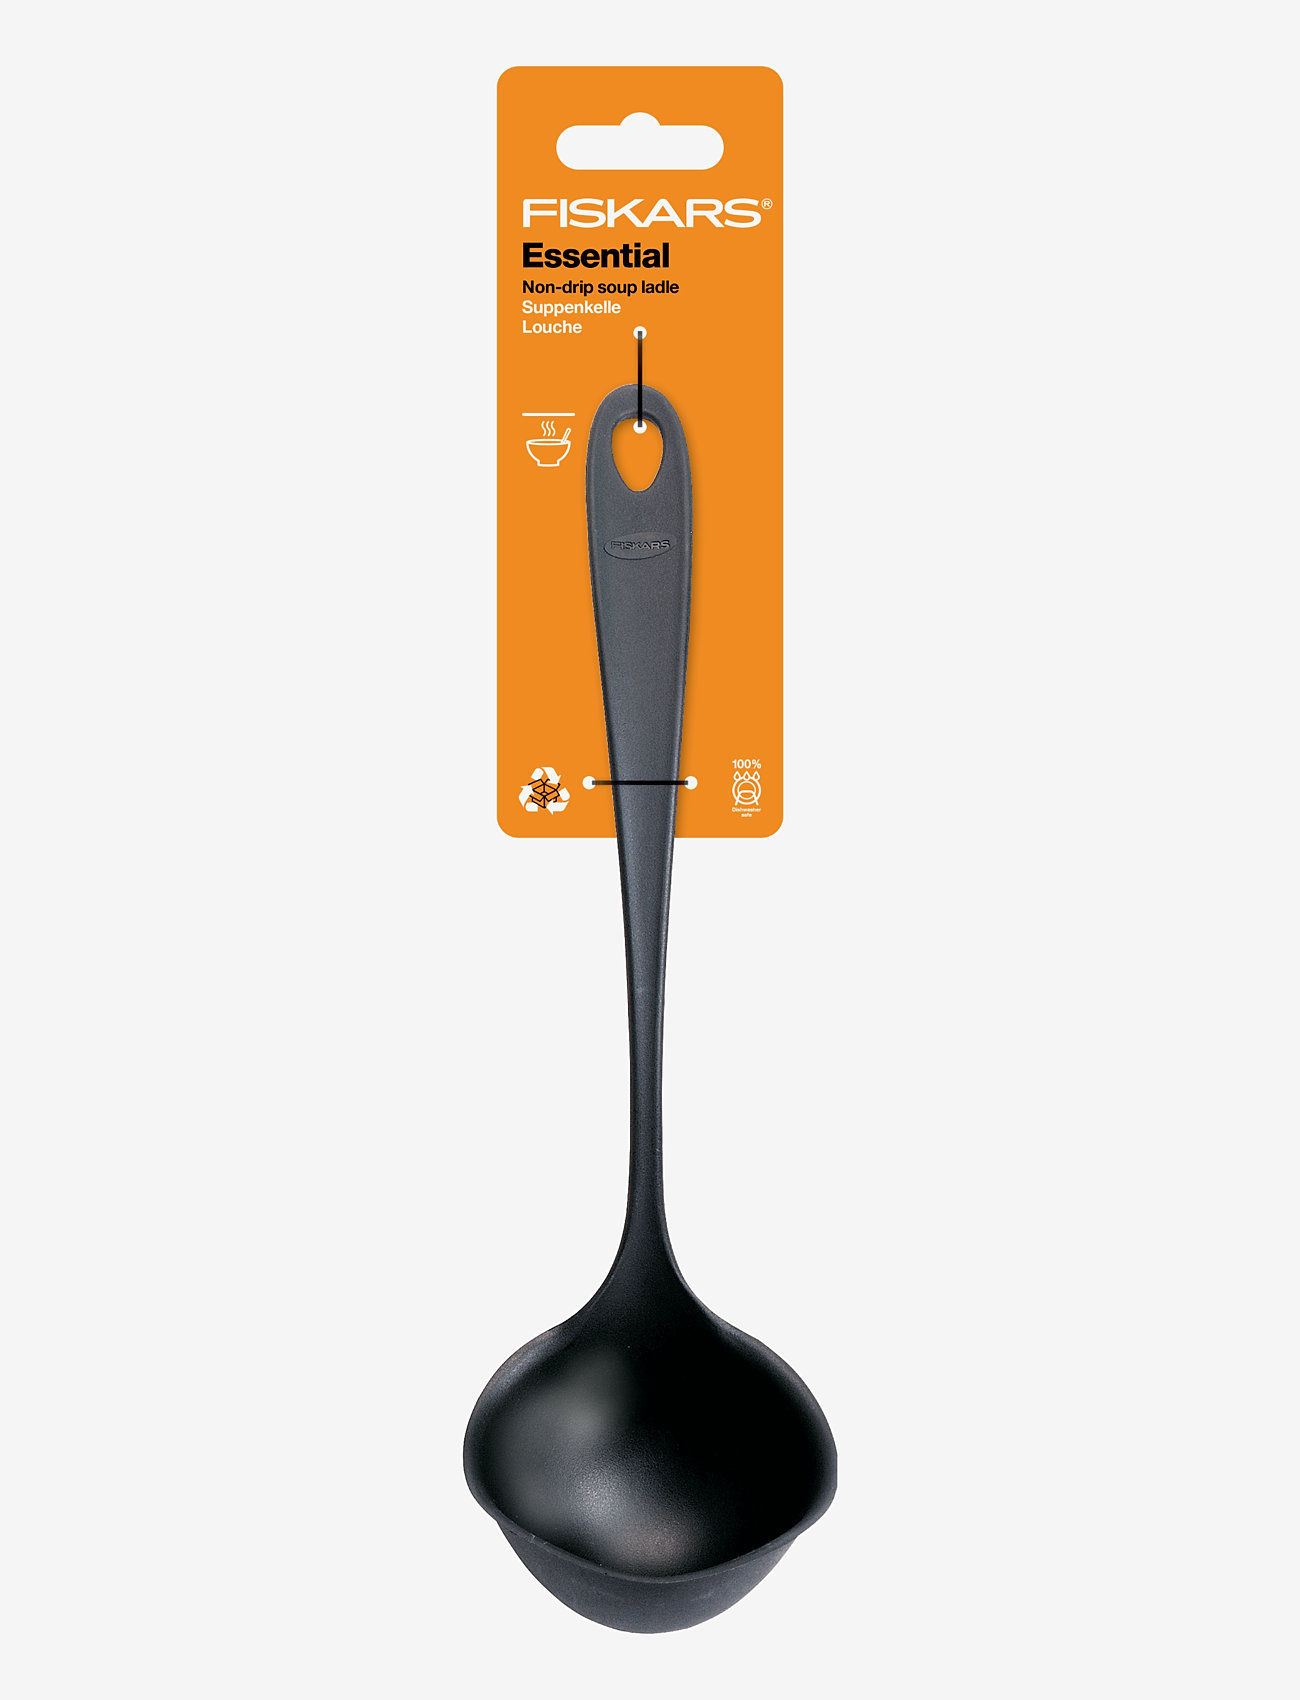 Fiskars - Essential Nondrip soup ladle - die niedrigsten preise - black - 1